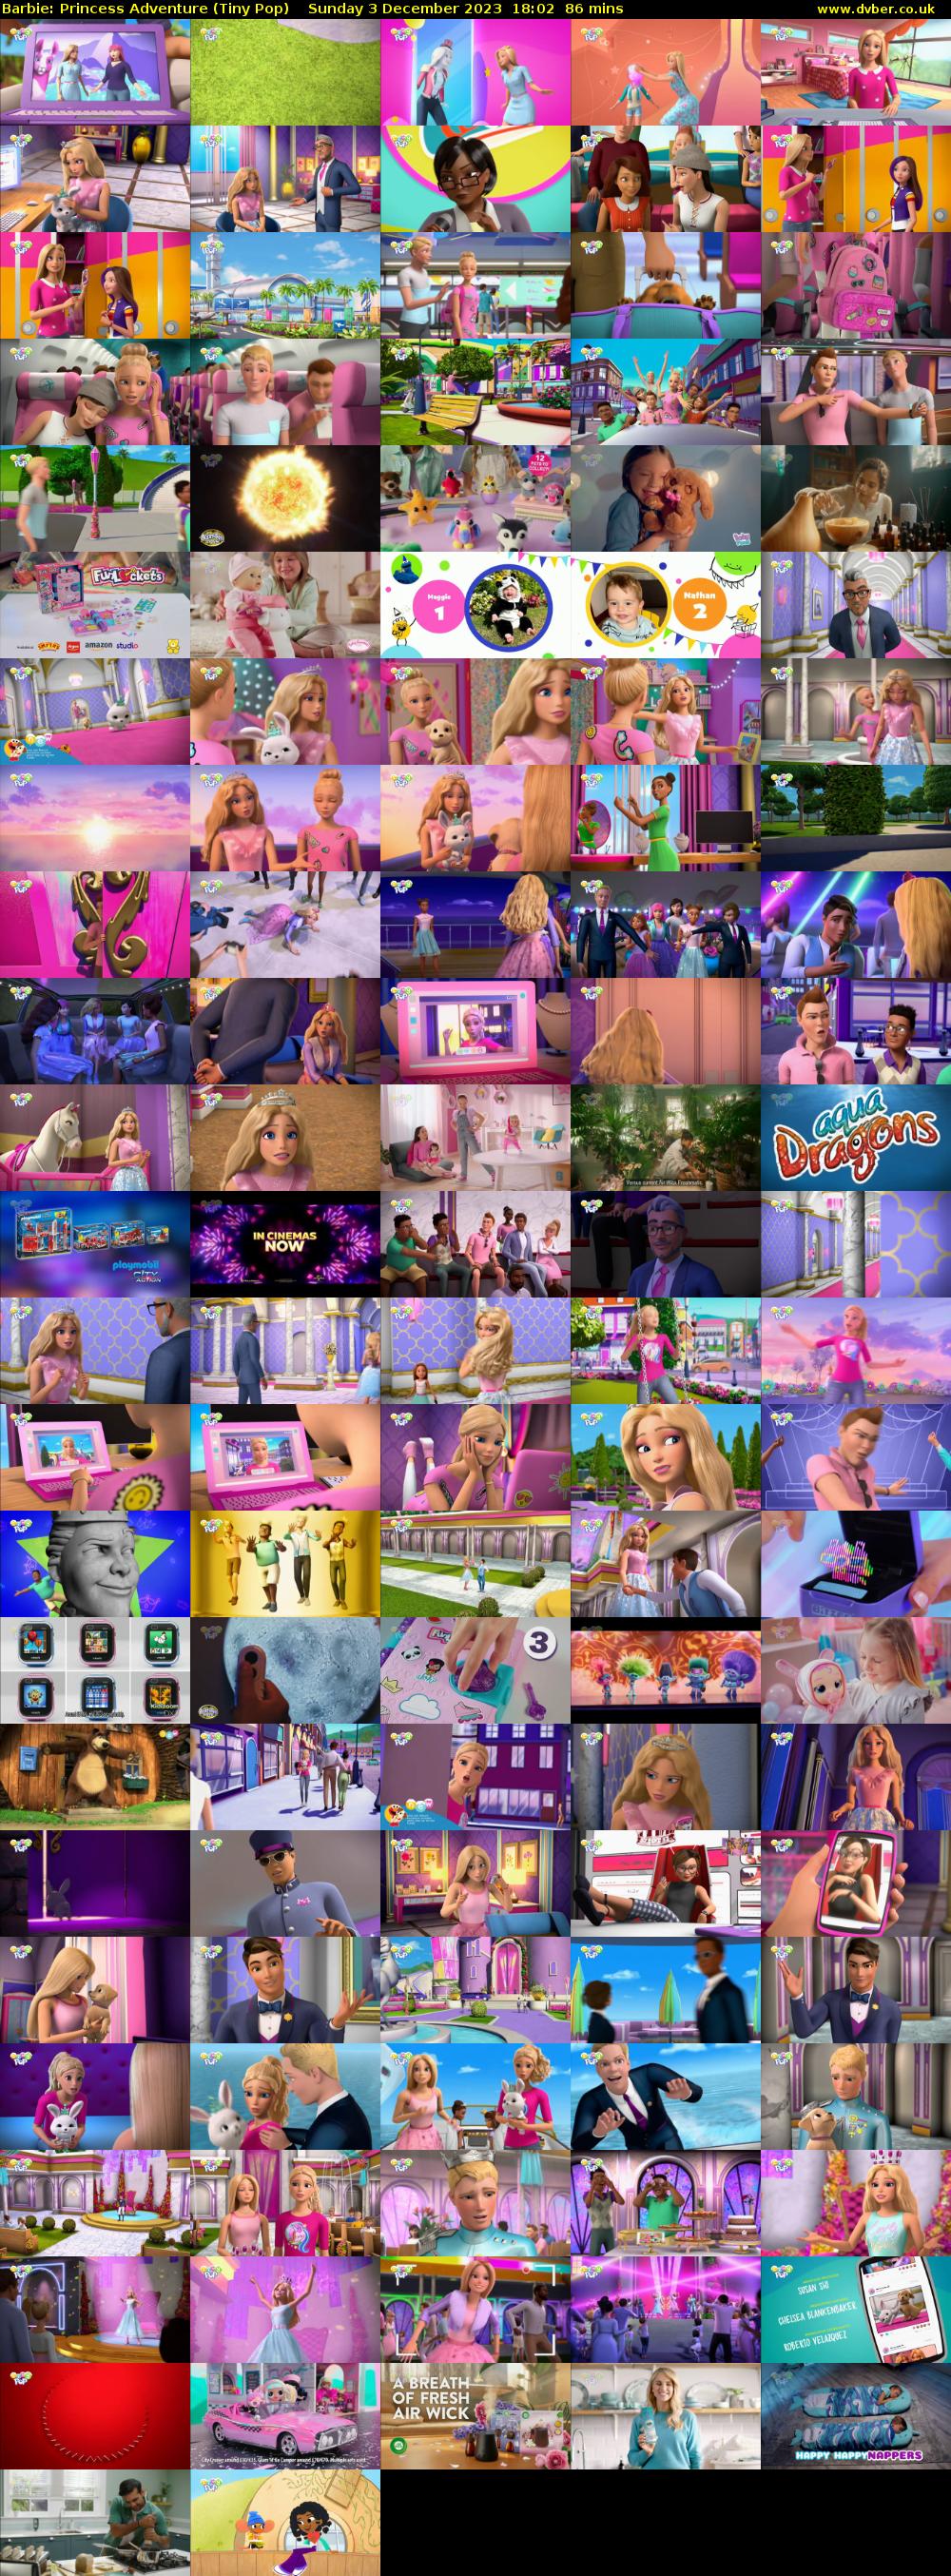 Barbie: Princess Adventure (Tiny Pop) Sunday 3 December 2023 18:02 - 19:28